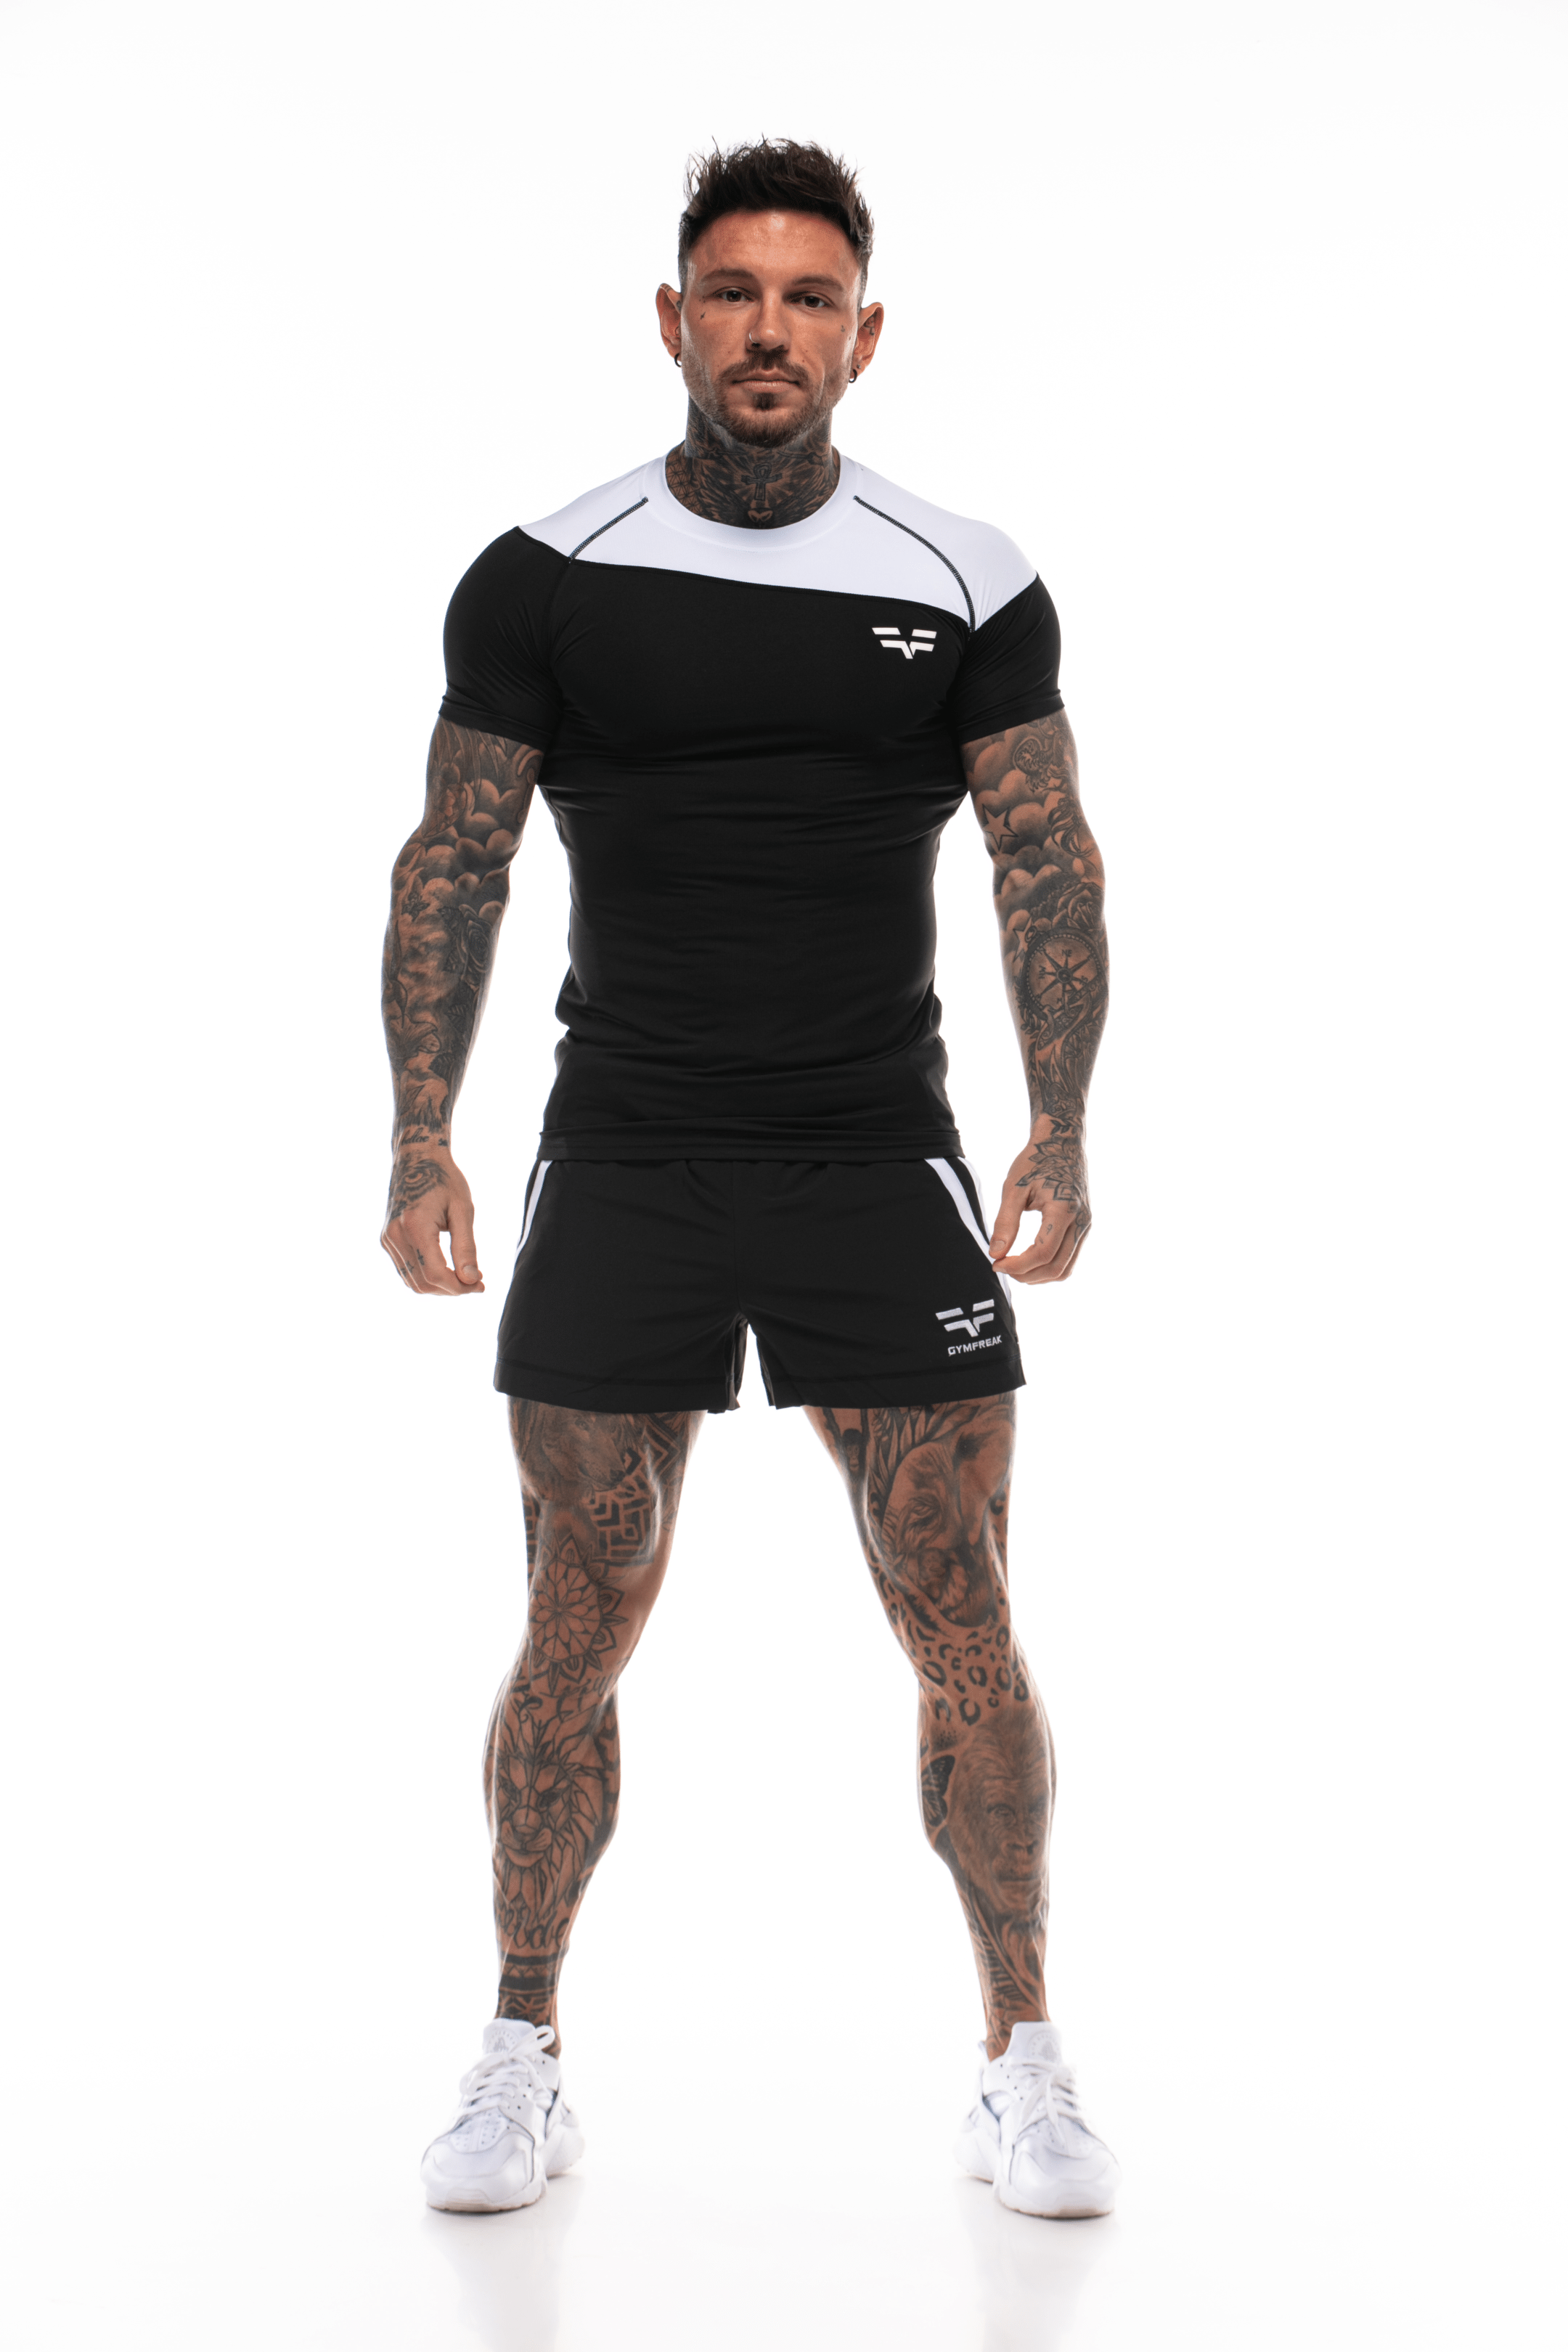 GymFreak Mens Pro Shorts - Black - 3.5 inch